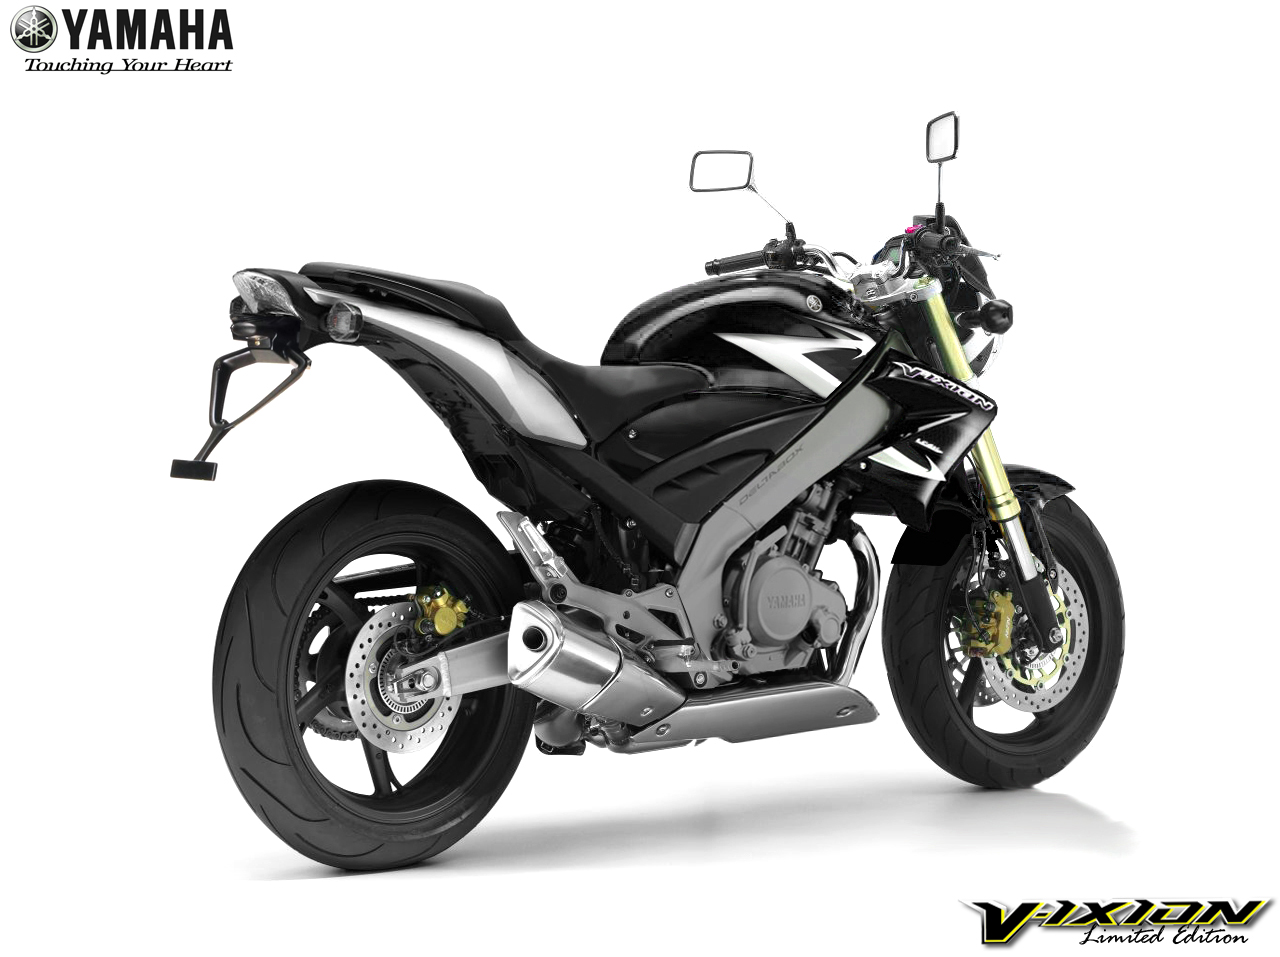 YAMAHA VIXION Limited EDITION Motor Modif Contest Trend